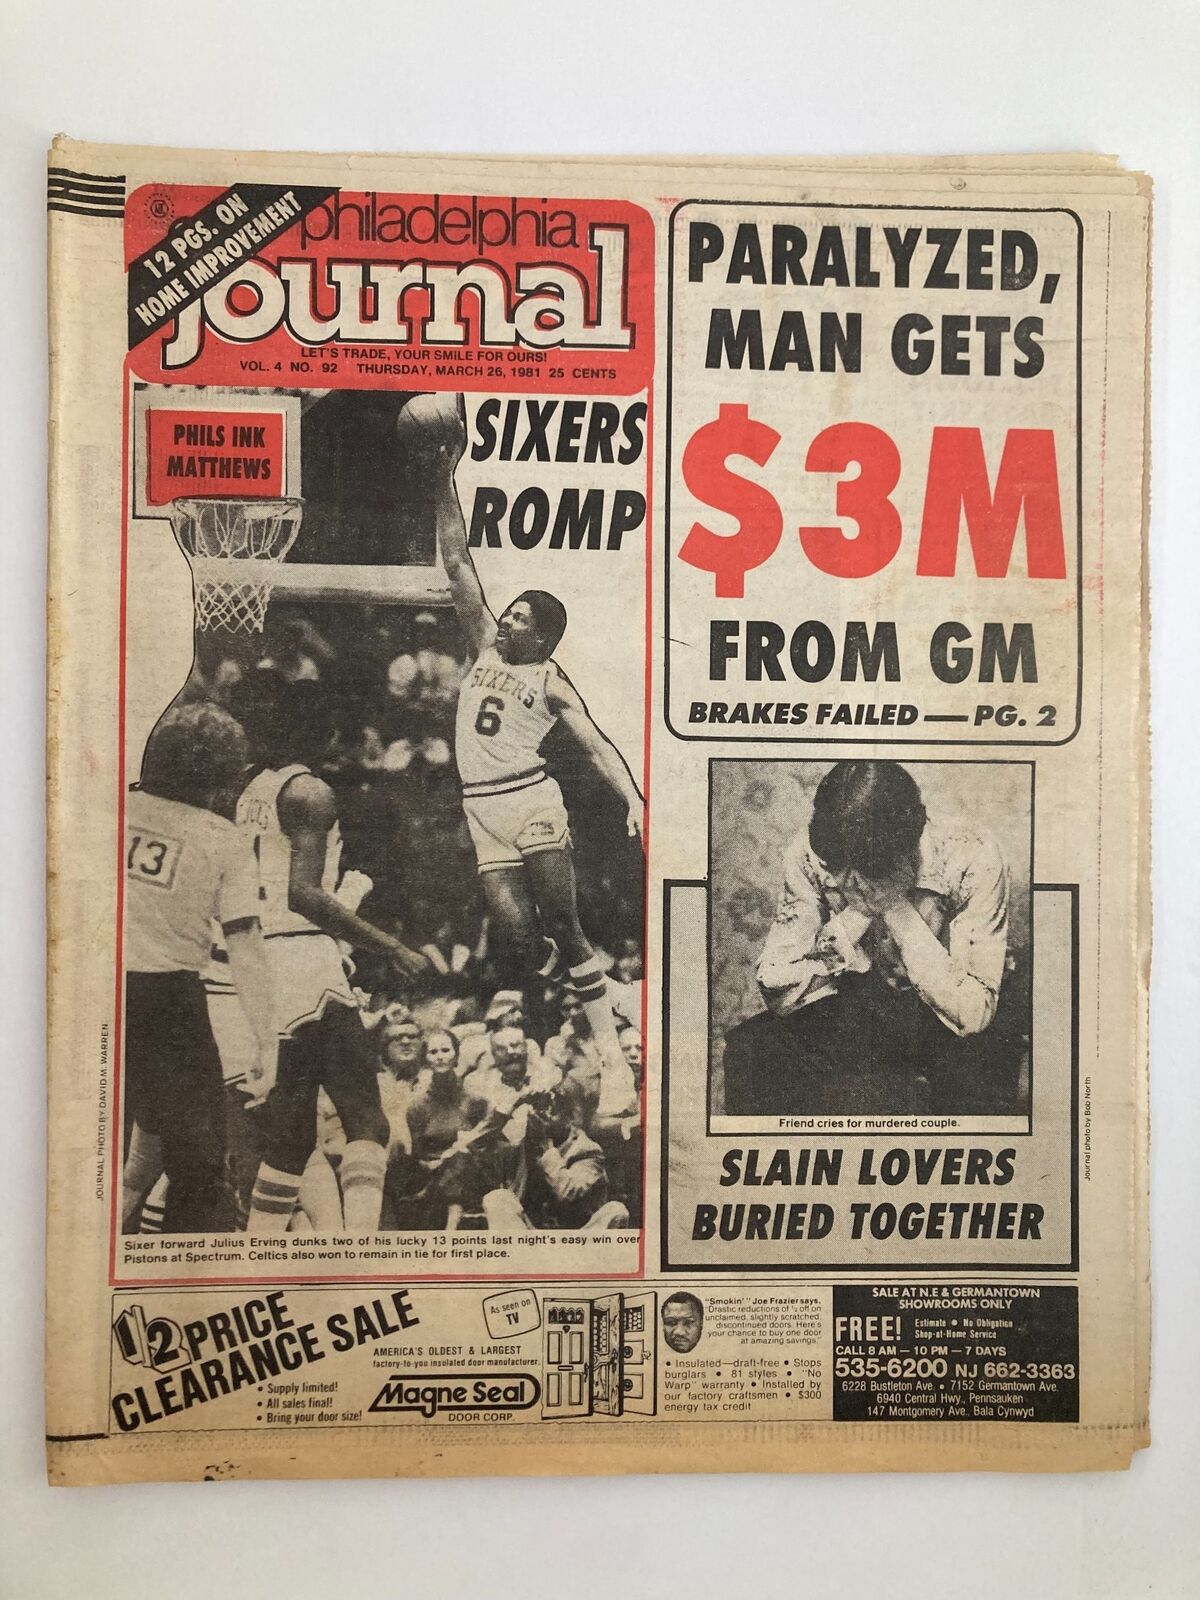 Philadelphia Journal Tabloid March 26 1981 Vol 4 #92 NBA Sixer Julius Erving